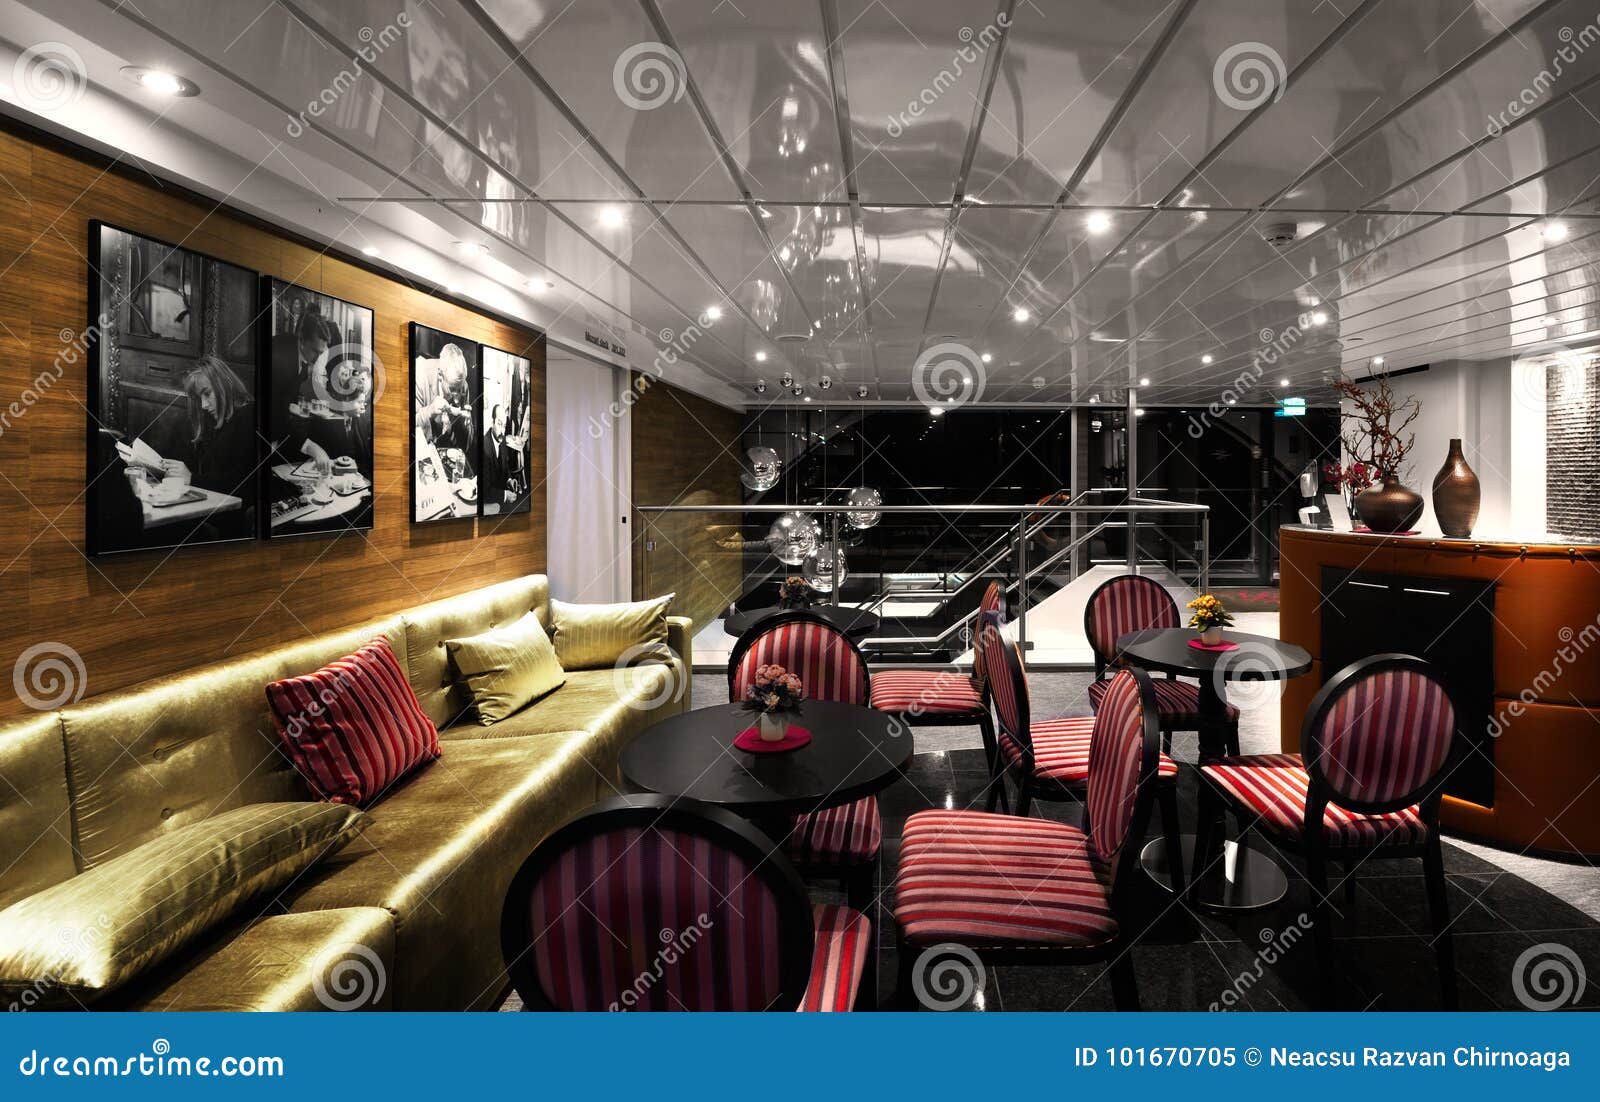 Luxurious Interior Of Restaurant Of Cruise Ship Editorial